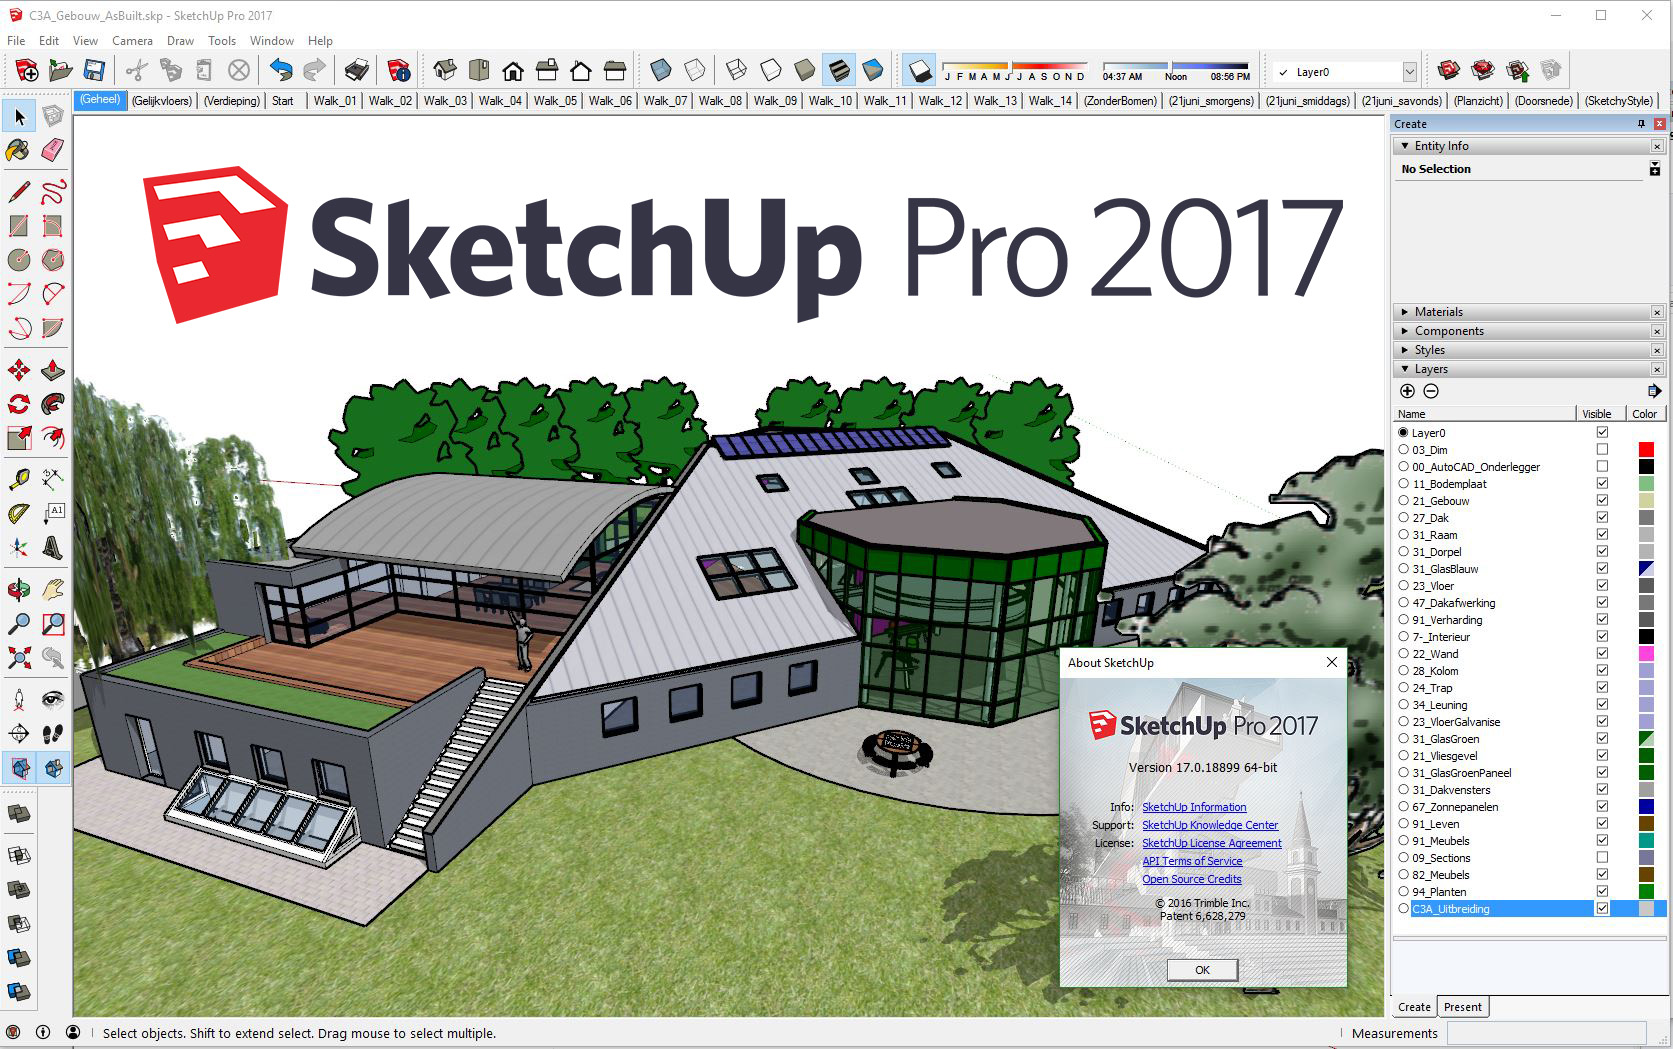 download sketchup pro 2017 crackeado 32 bits